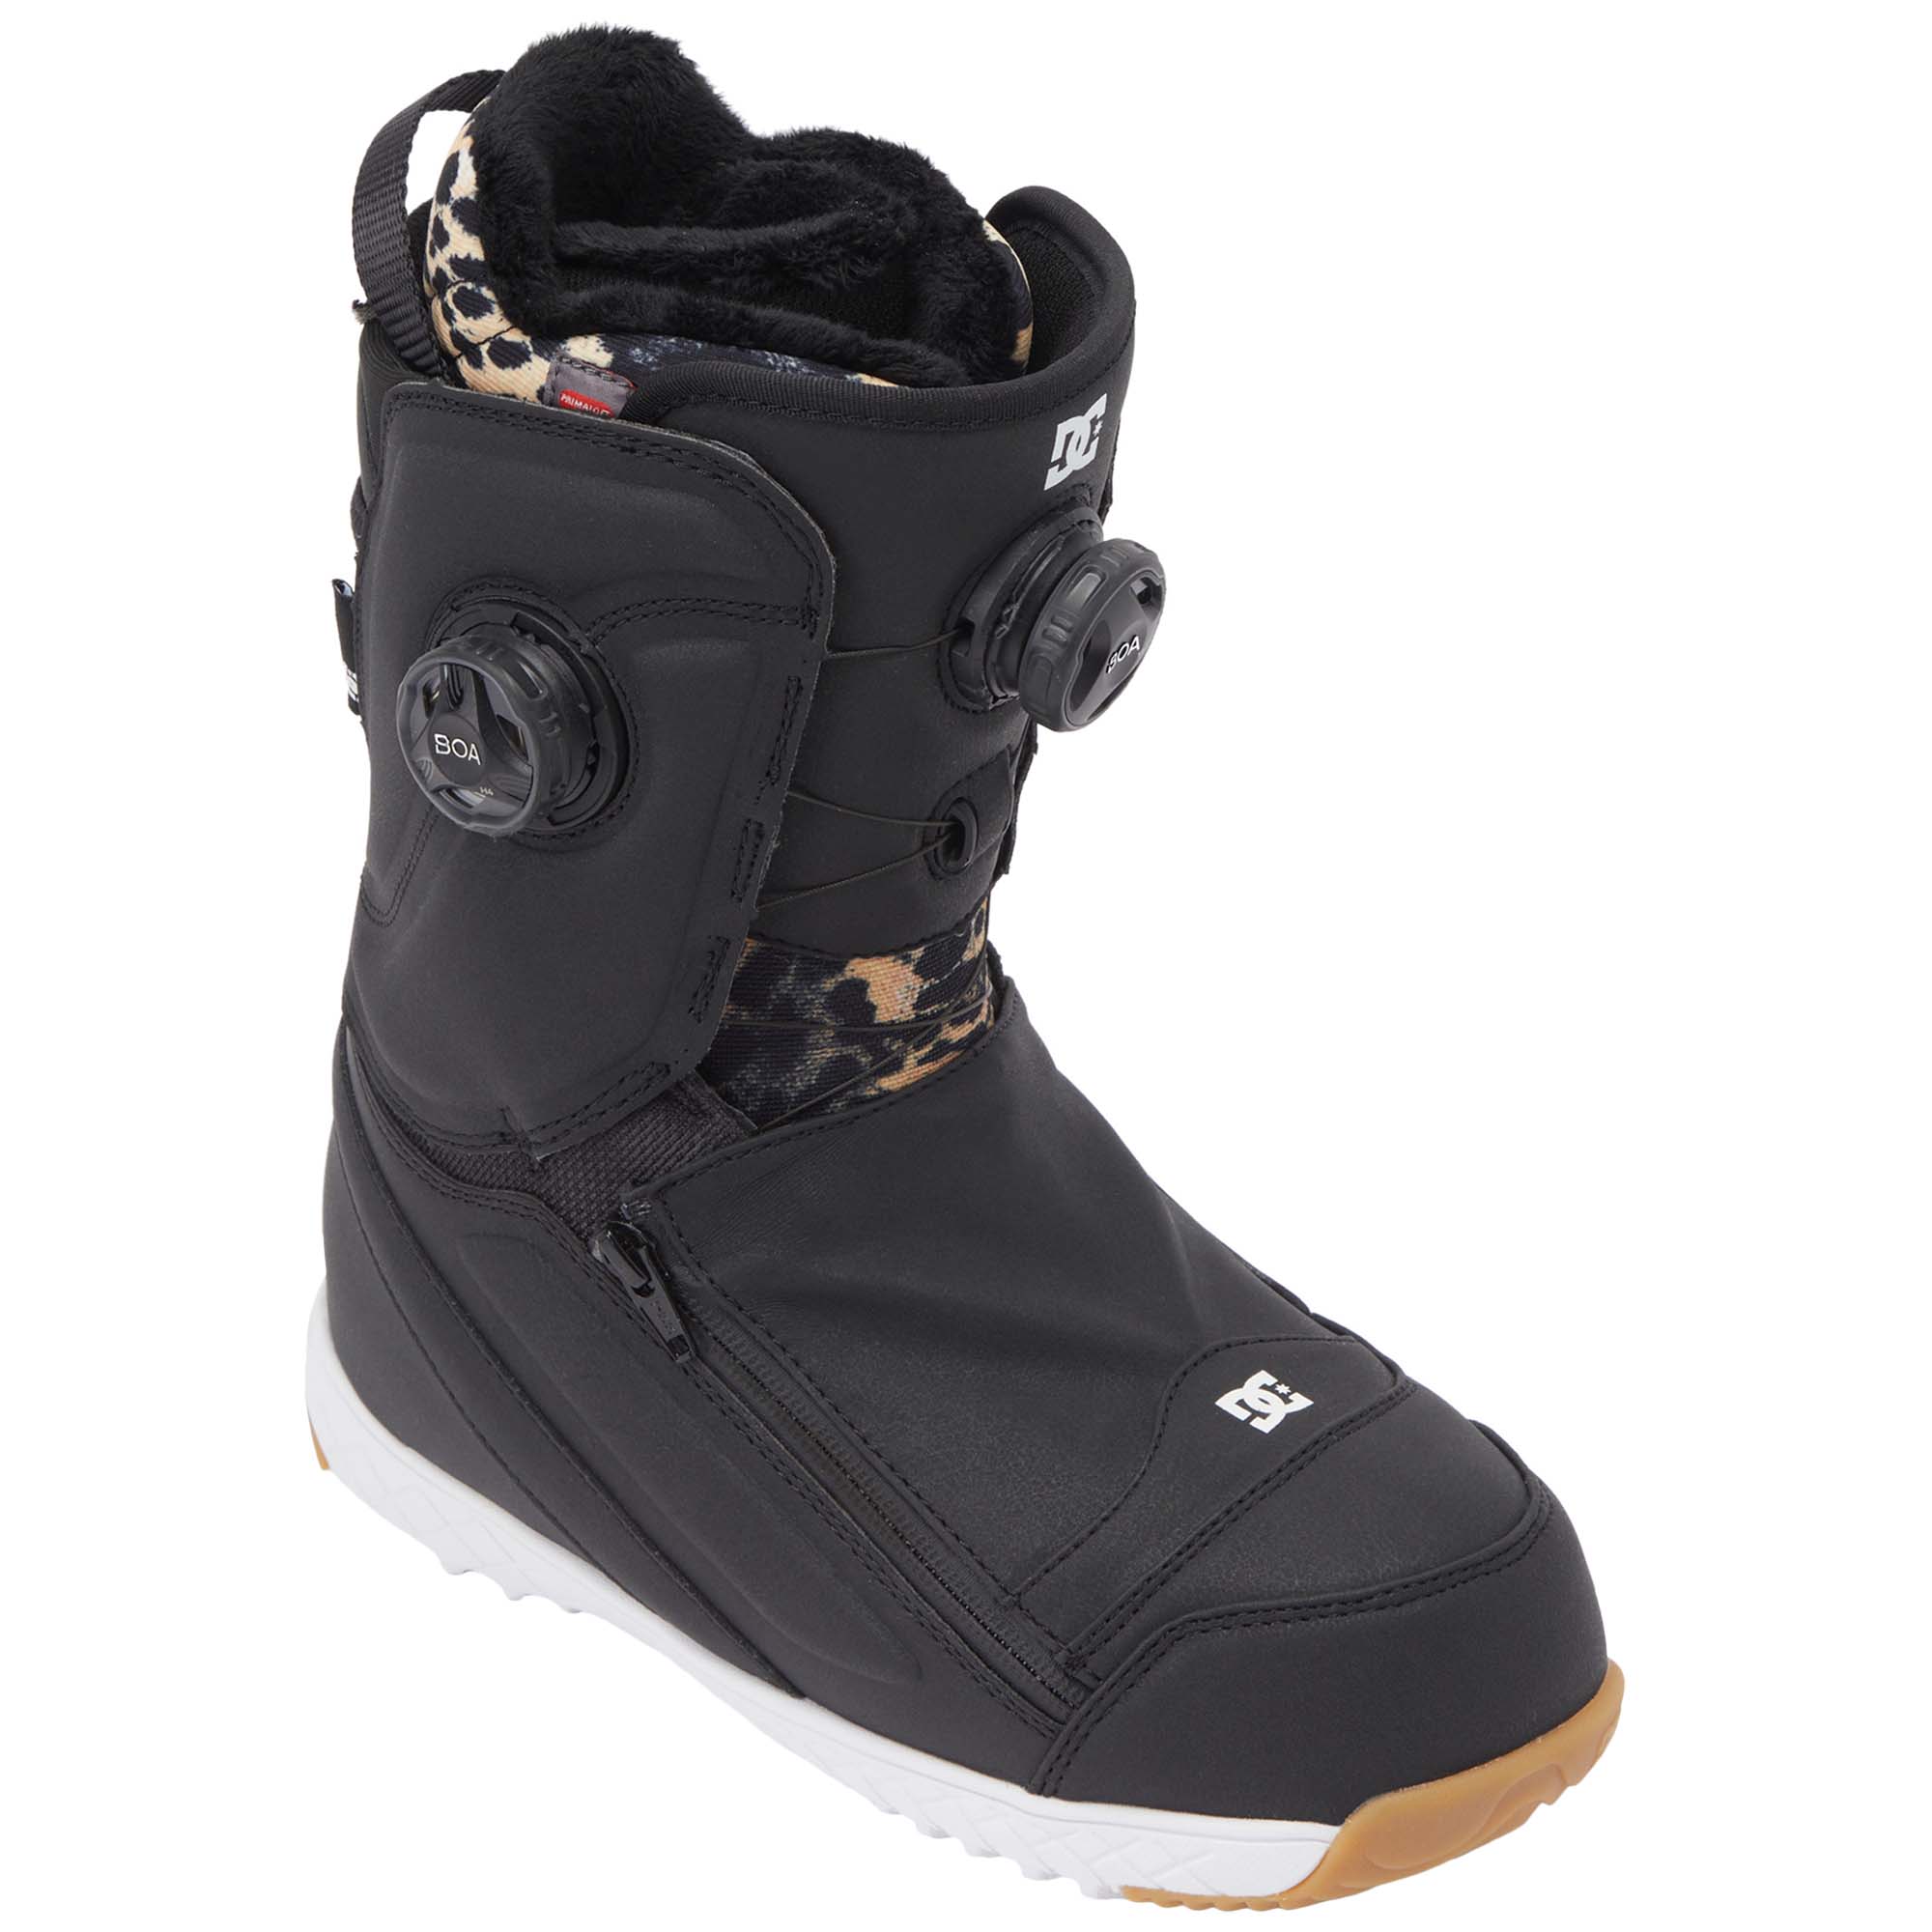 DC Mora Women's Boa Snowboard Boots